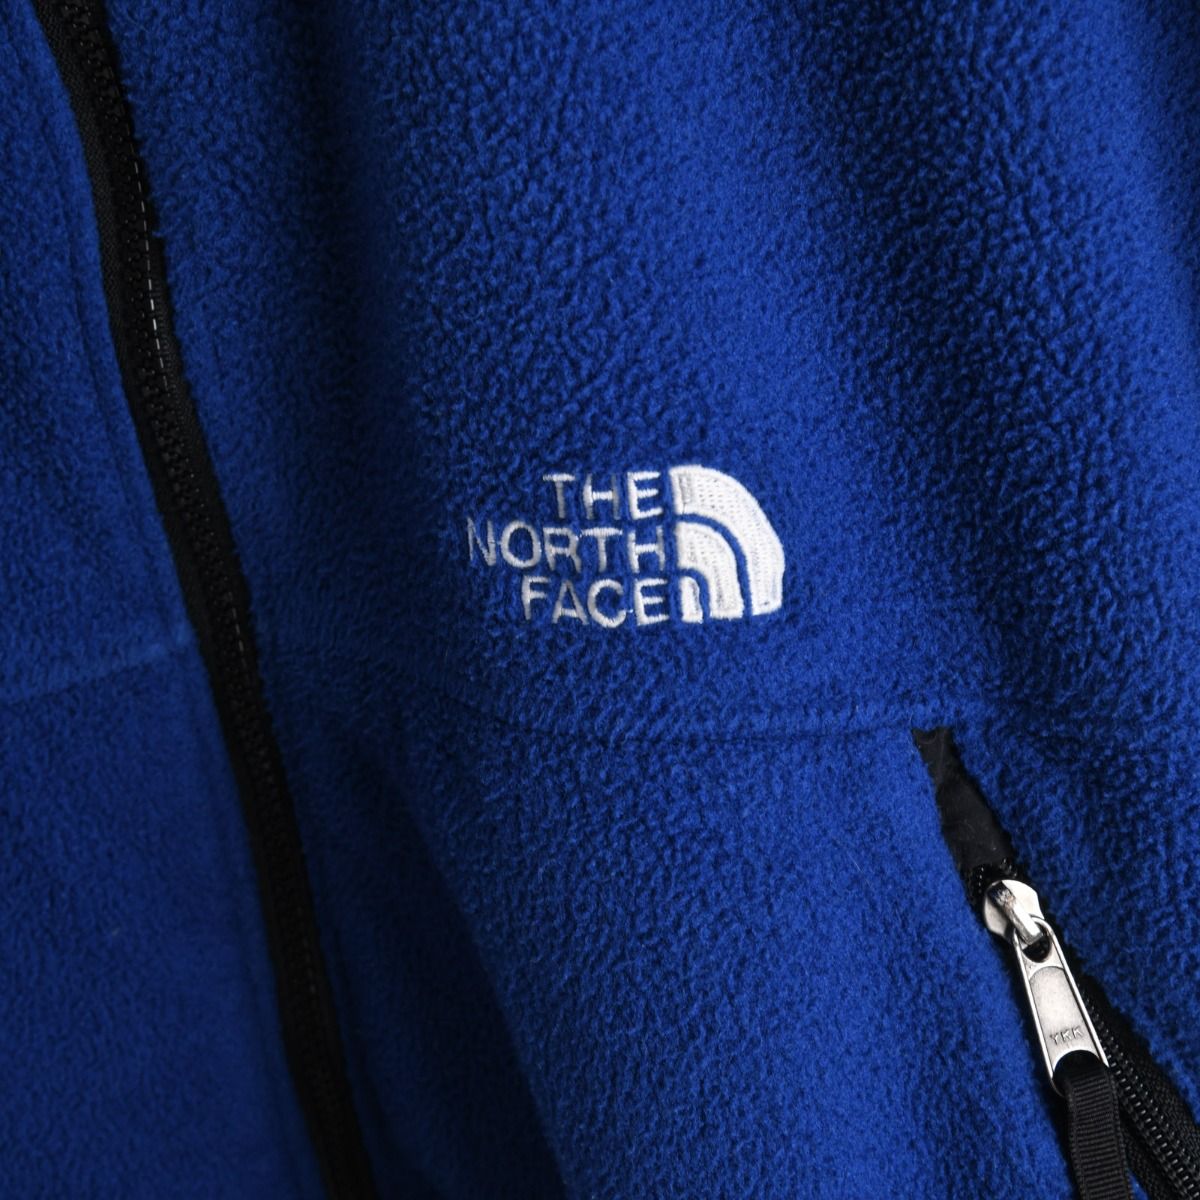 The North Face 1980s Fleece